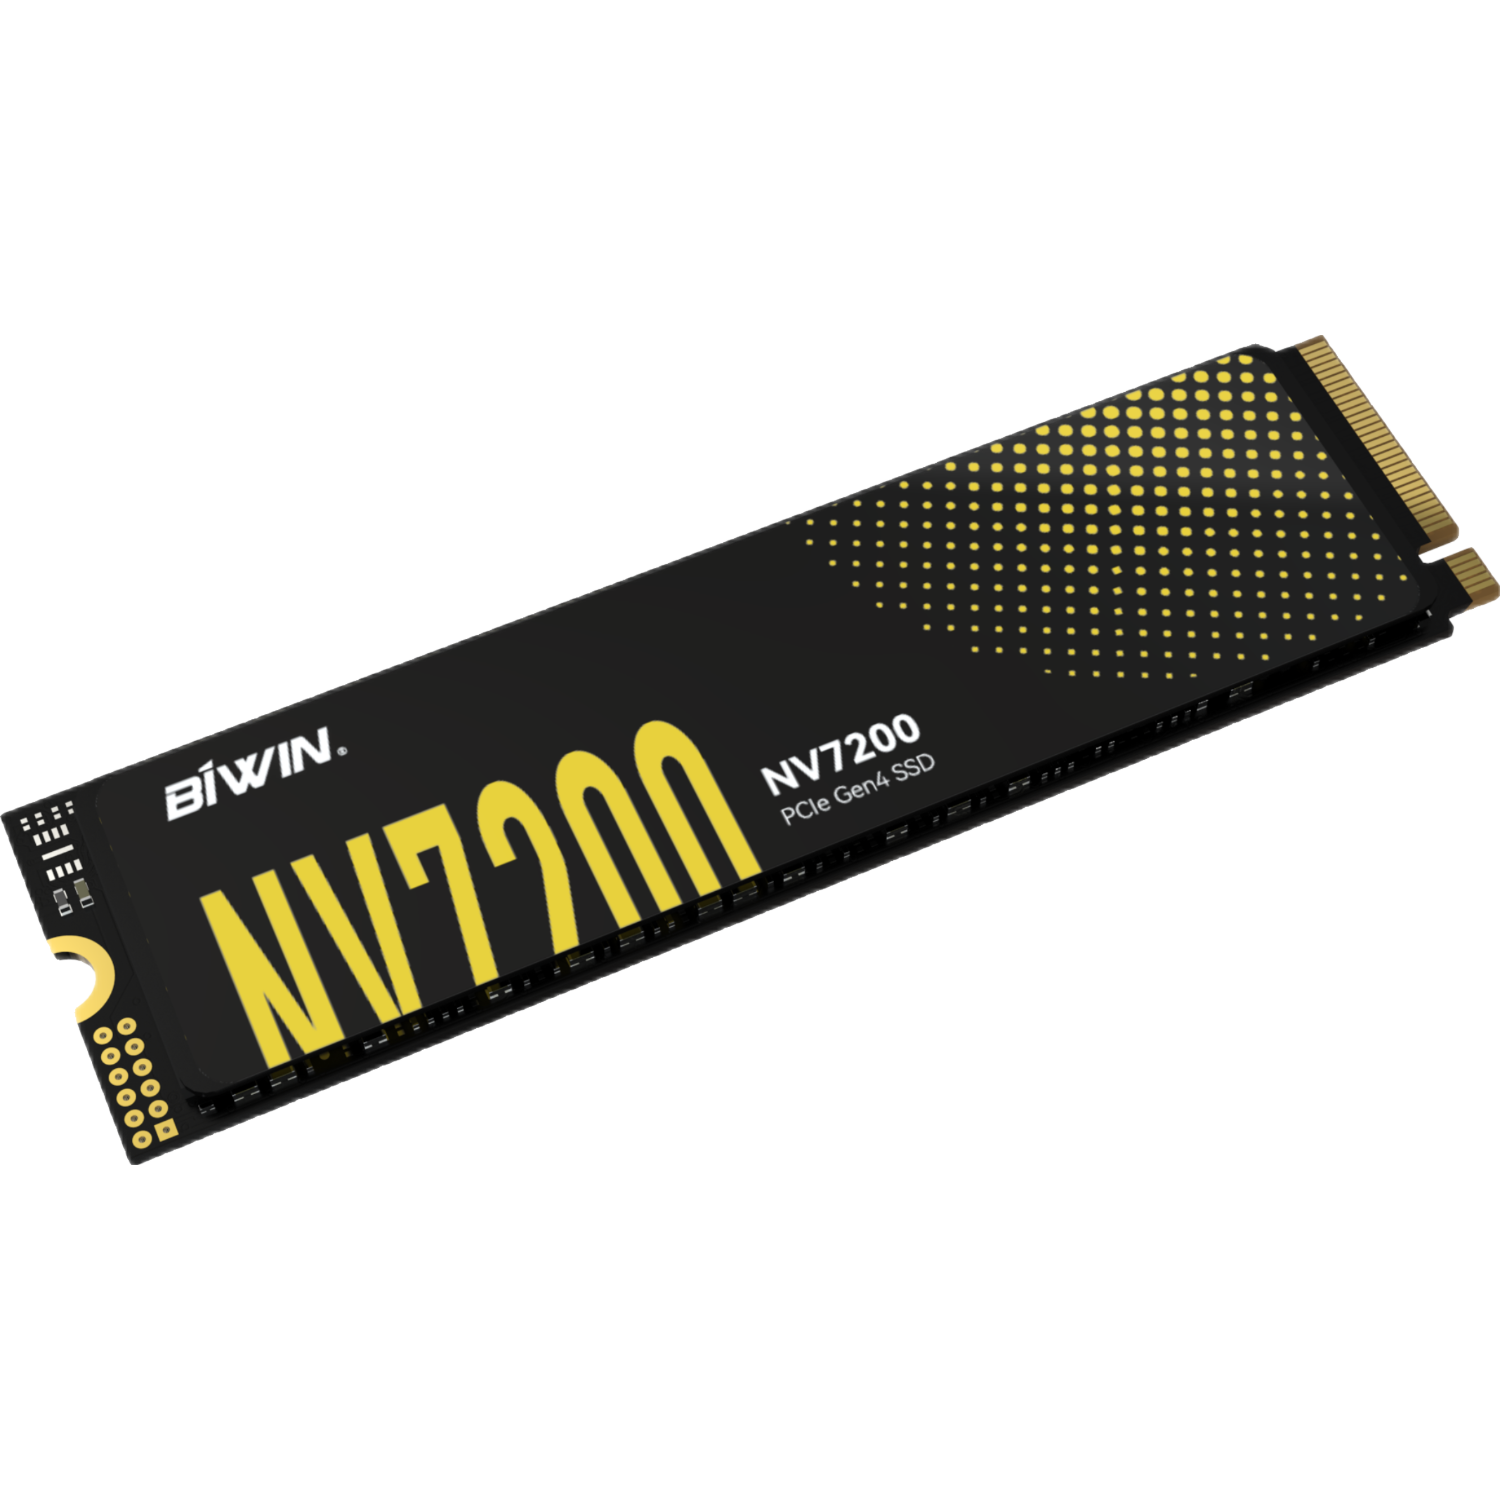 BIWIN 佰维 2TB SSD固态硬盘M.2接口(NVMe协议) NV7200商务系列｜NVMe PCIe4.0读速7200MB/s